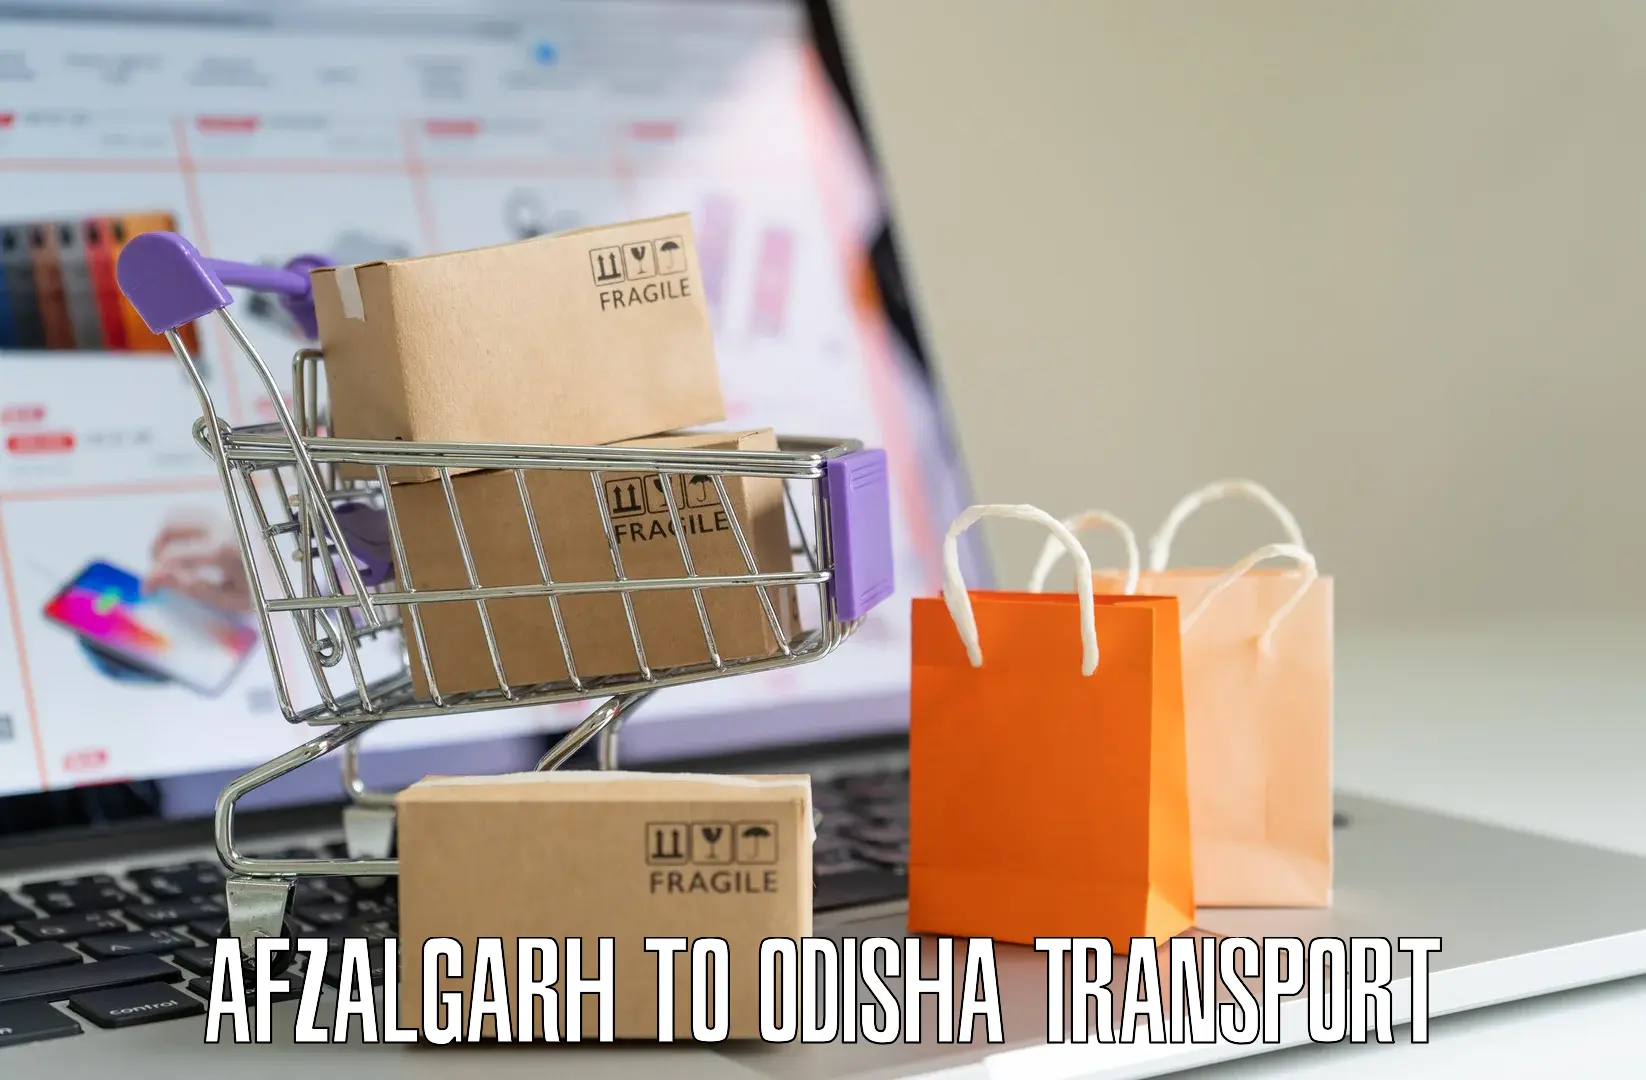 Two wheeler parcel service Afzalgarh to Mohana